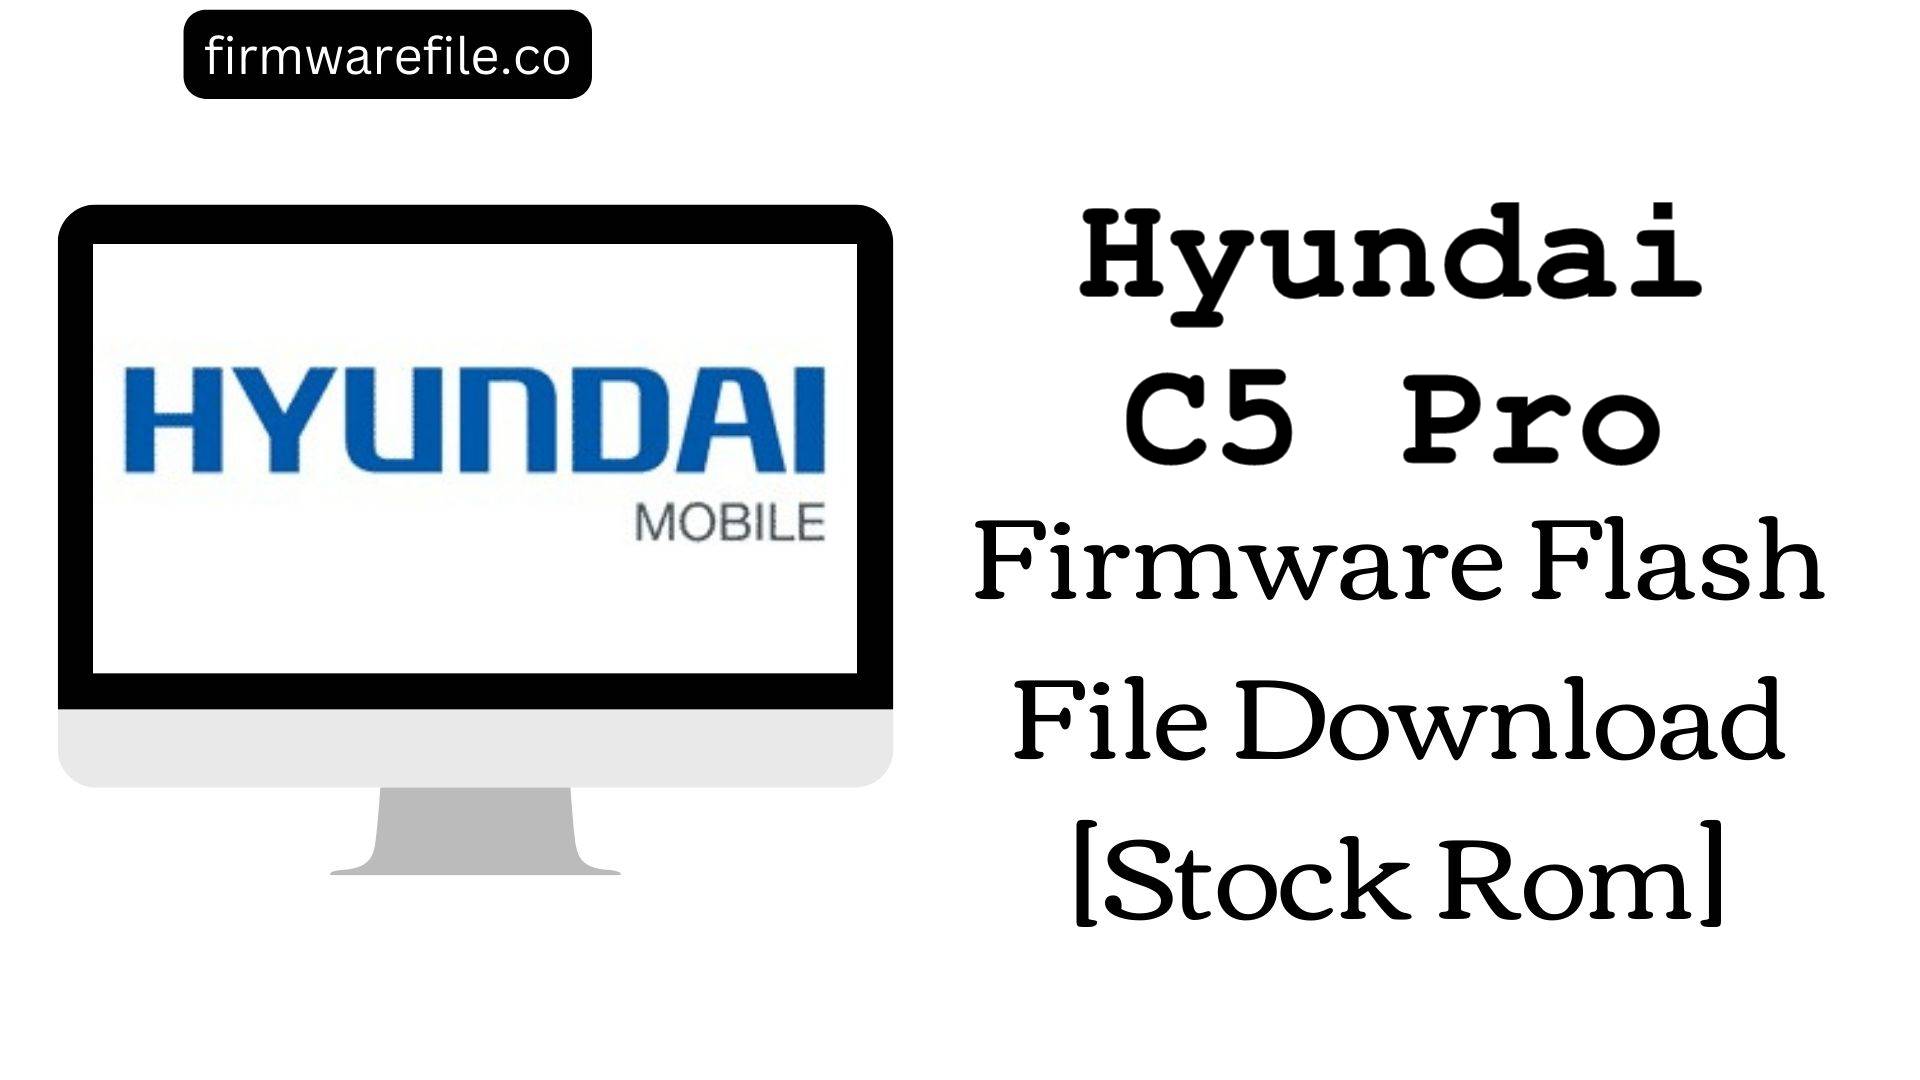 Hyundai C5 Pro